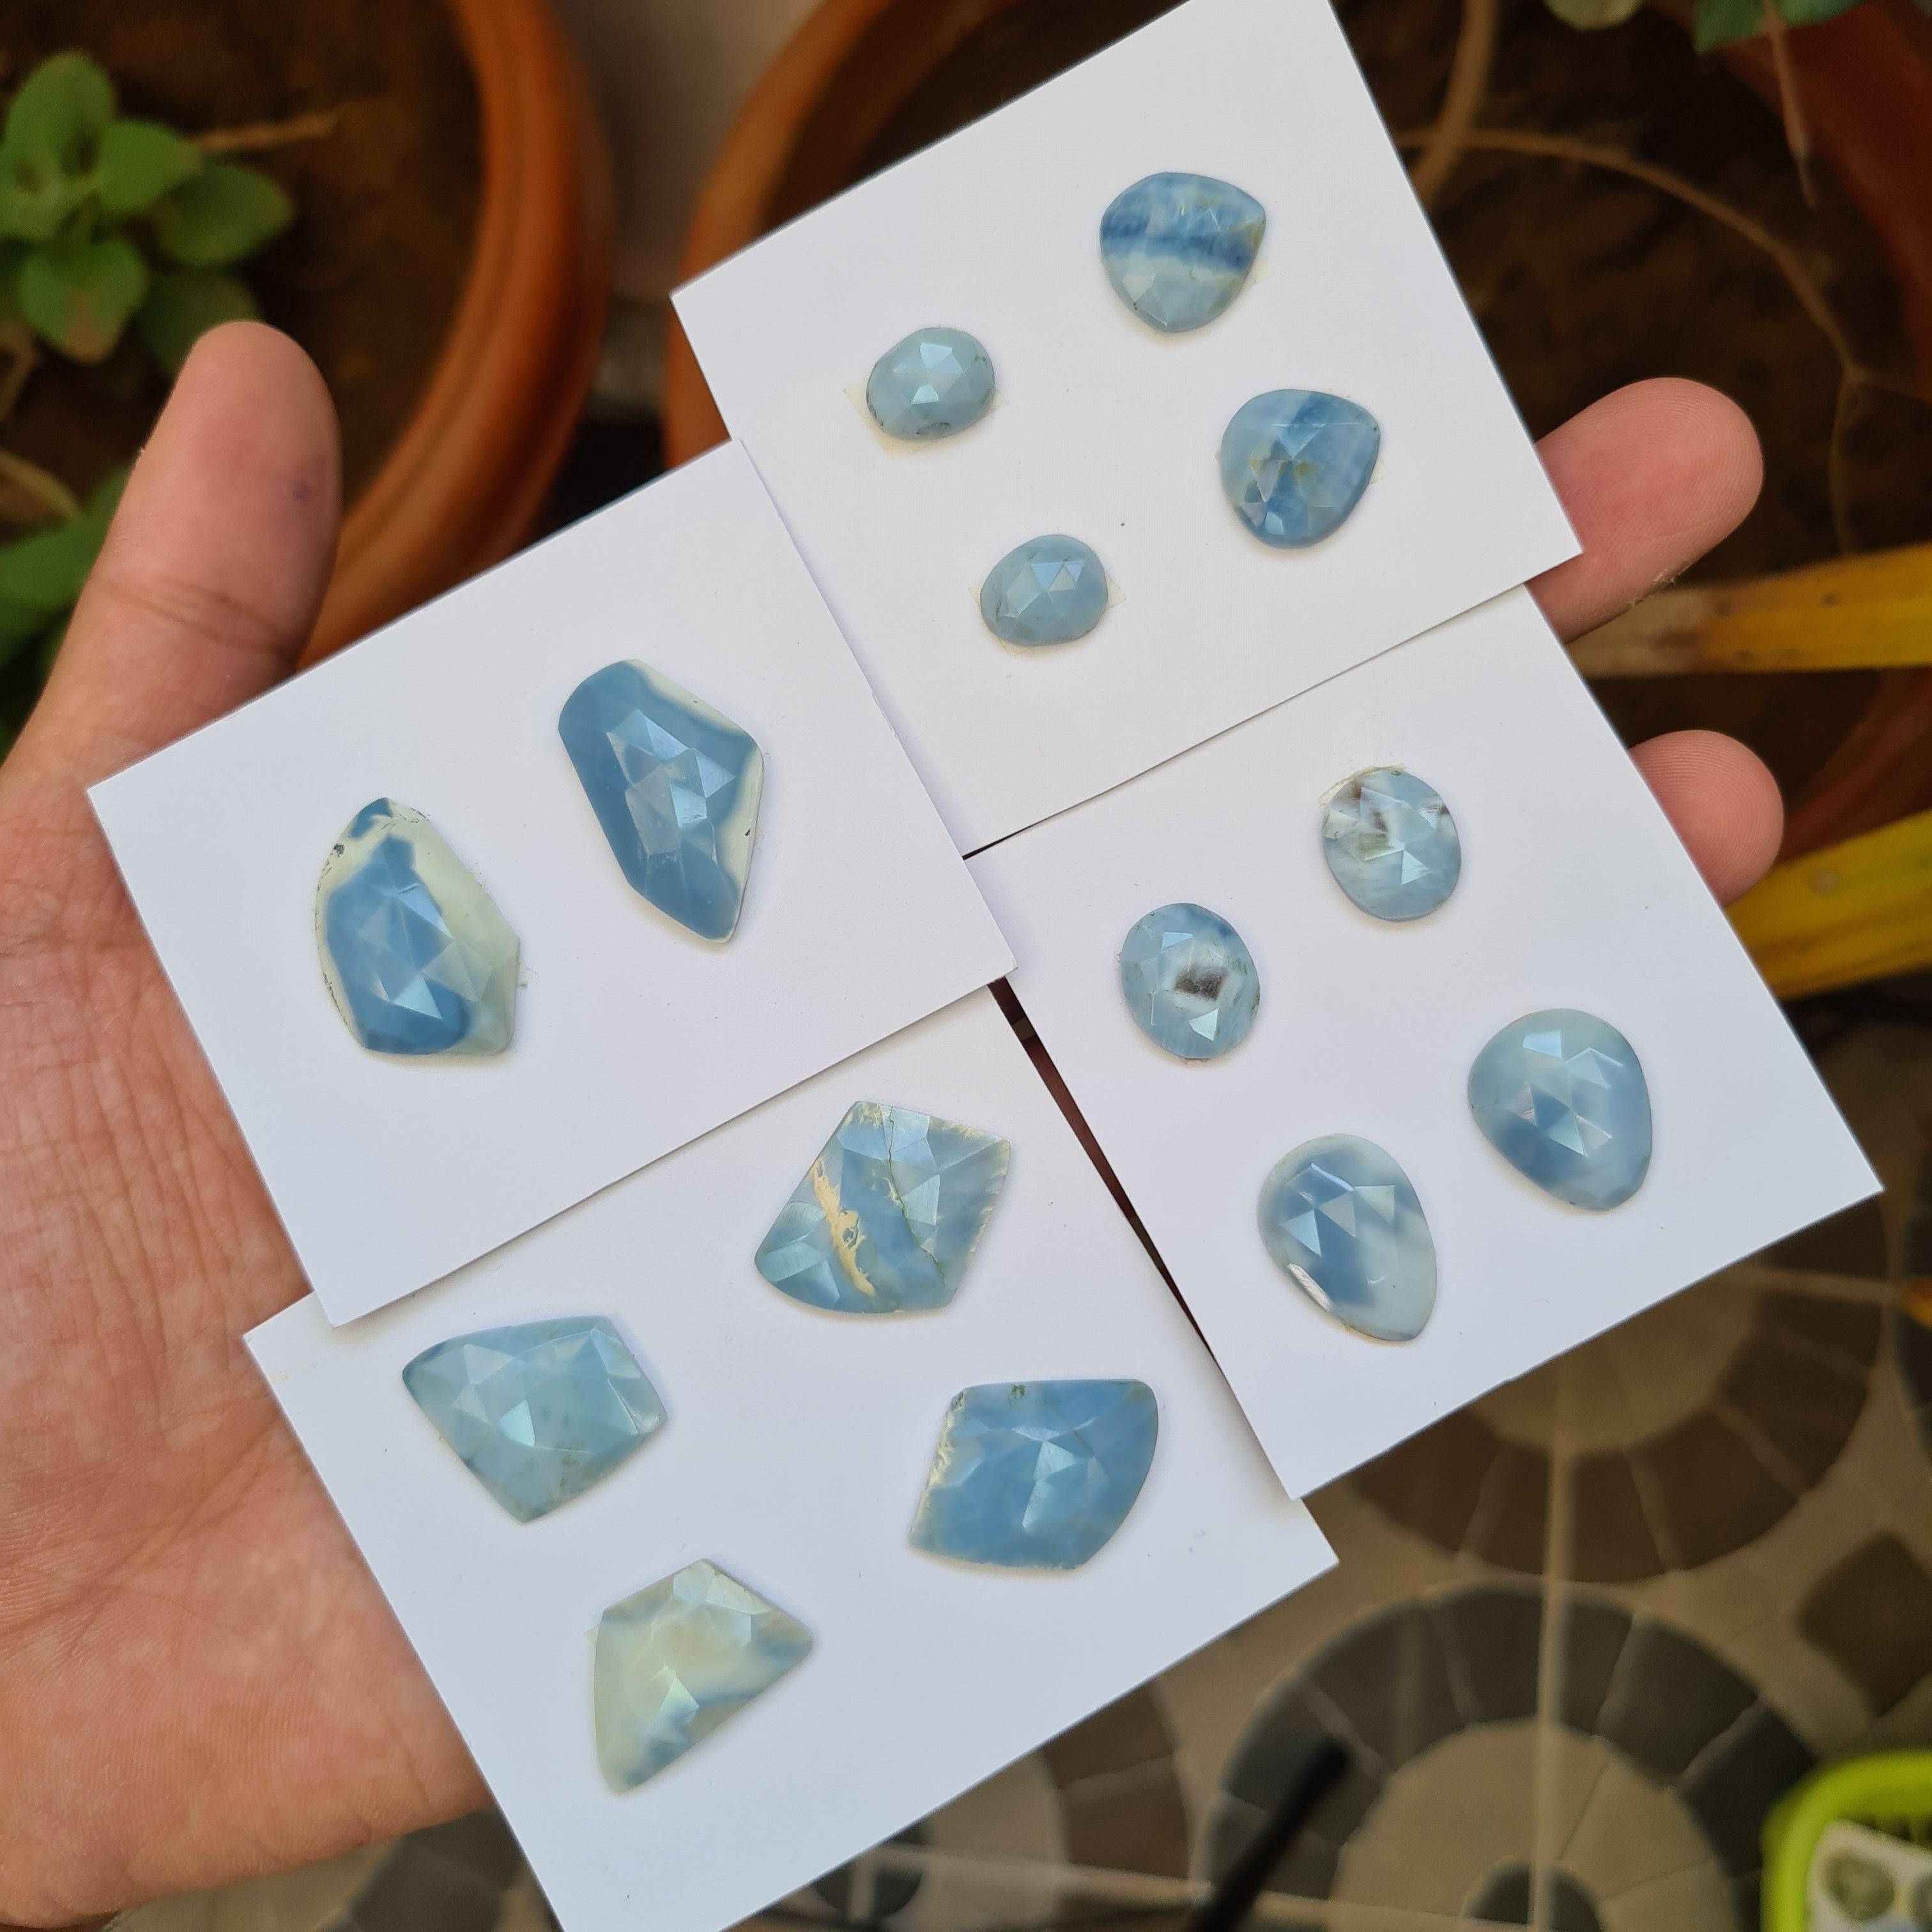 14 pcs Natural Blue Lace Opal Faceted Gemstones Mix Shape, 12-27mm - The LabradoriteKing